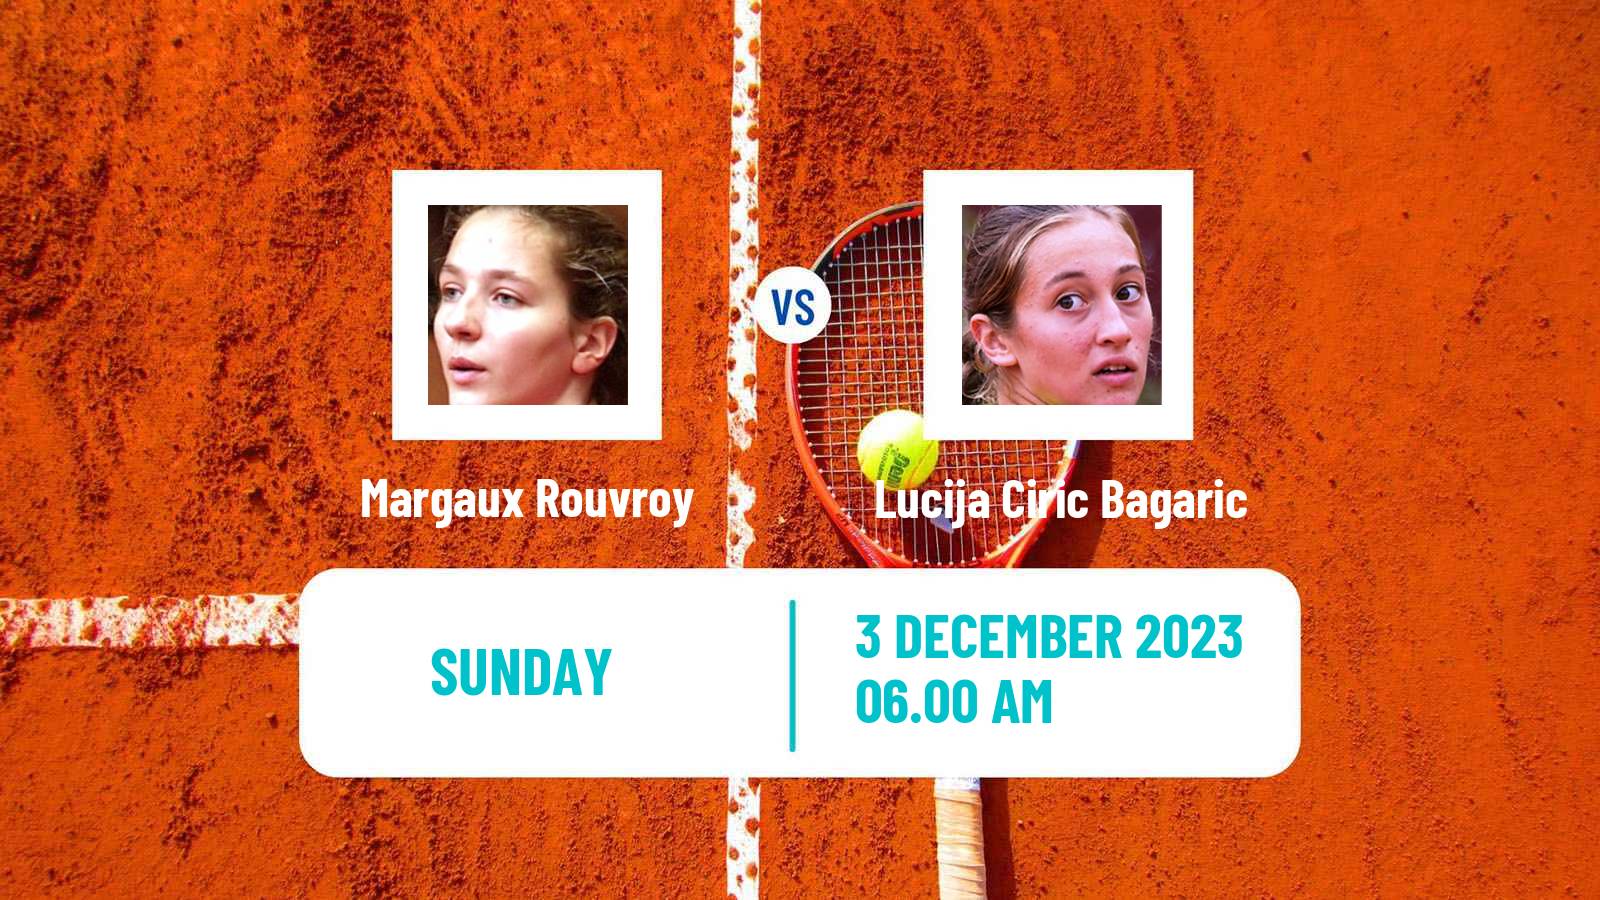 Tennis ITF W25 Lousada 2 Women Margaux Rouvroy - Lucija Ciric Bagaric